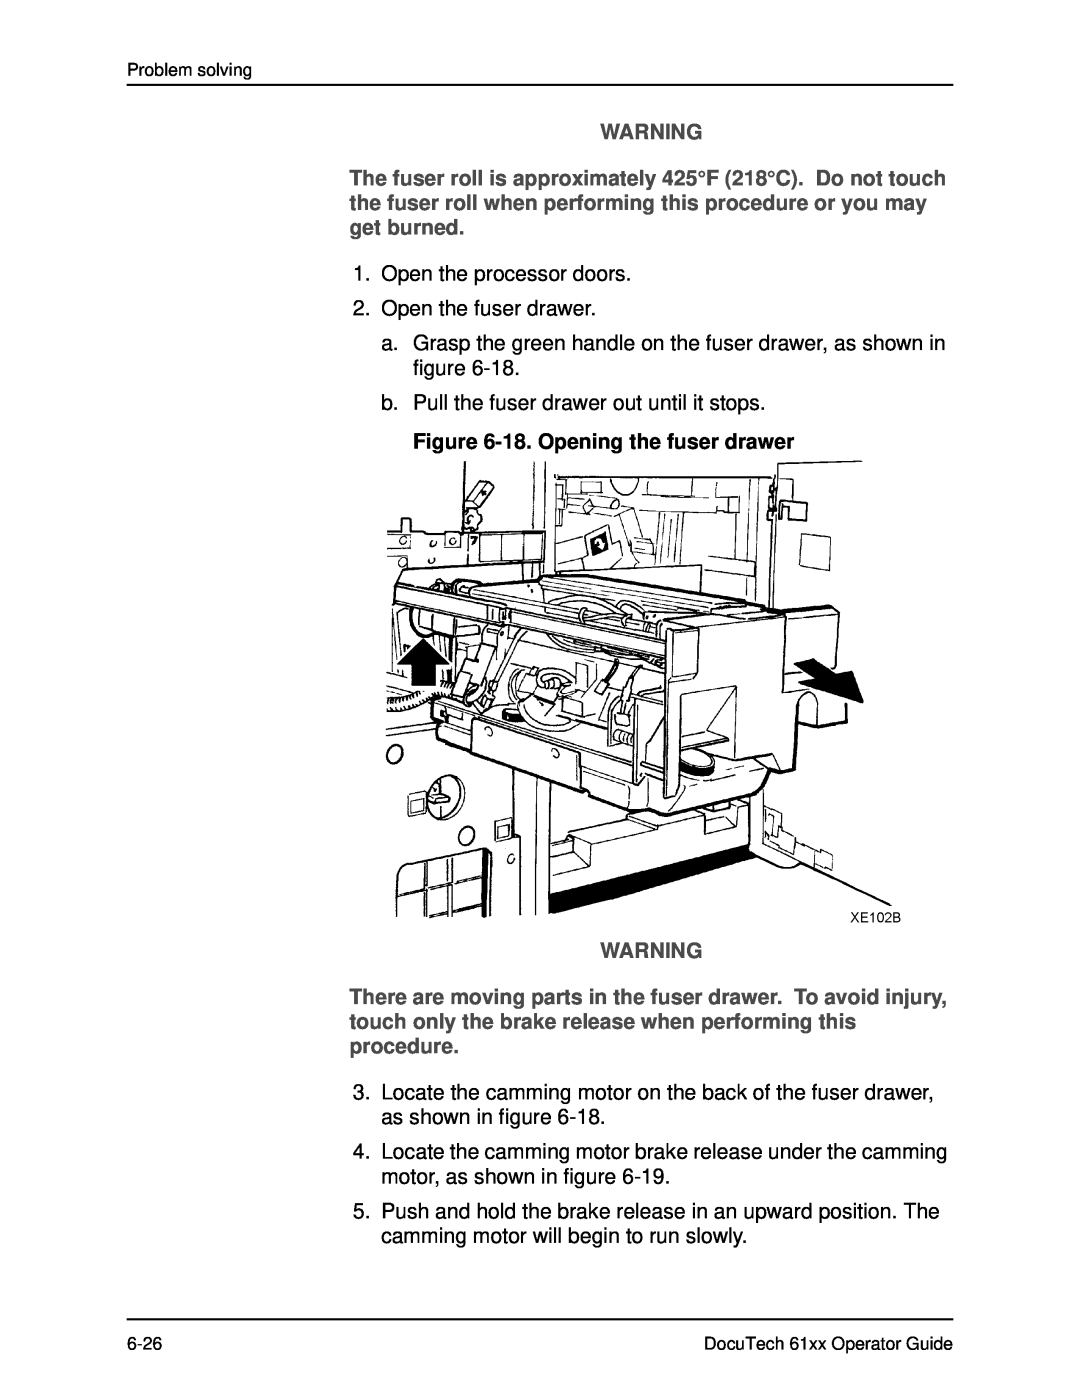 Xerox 61xx manual 18. Opening the fuser drawer 